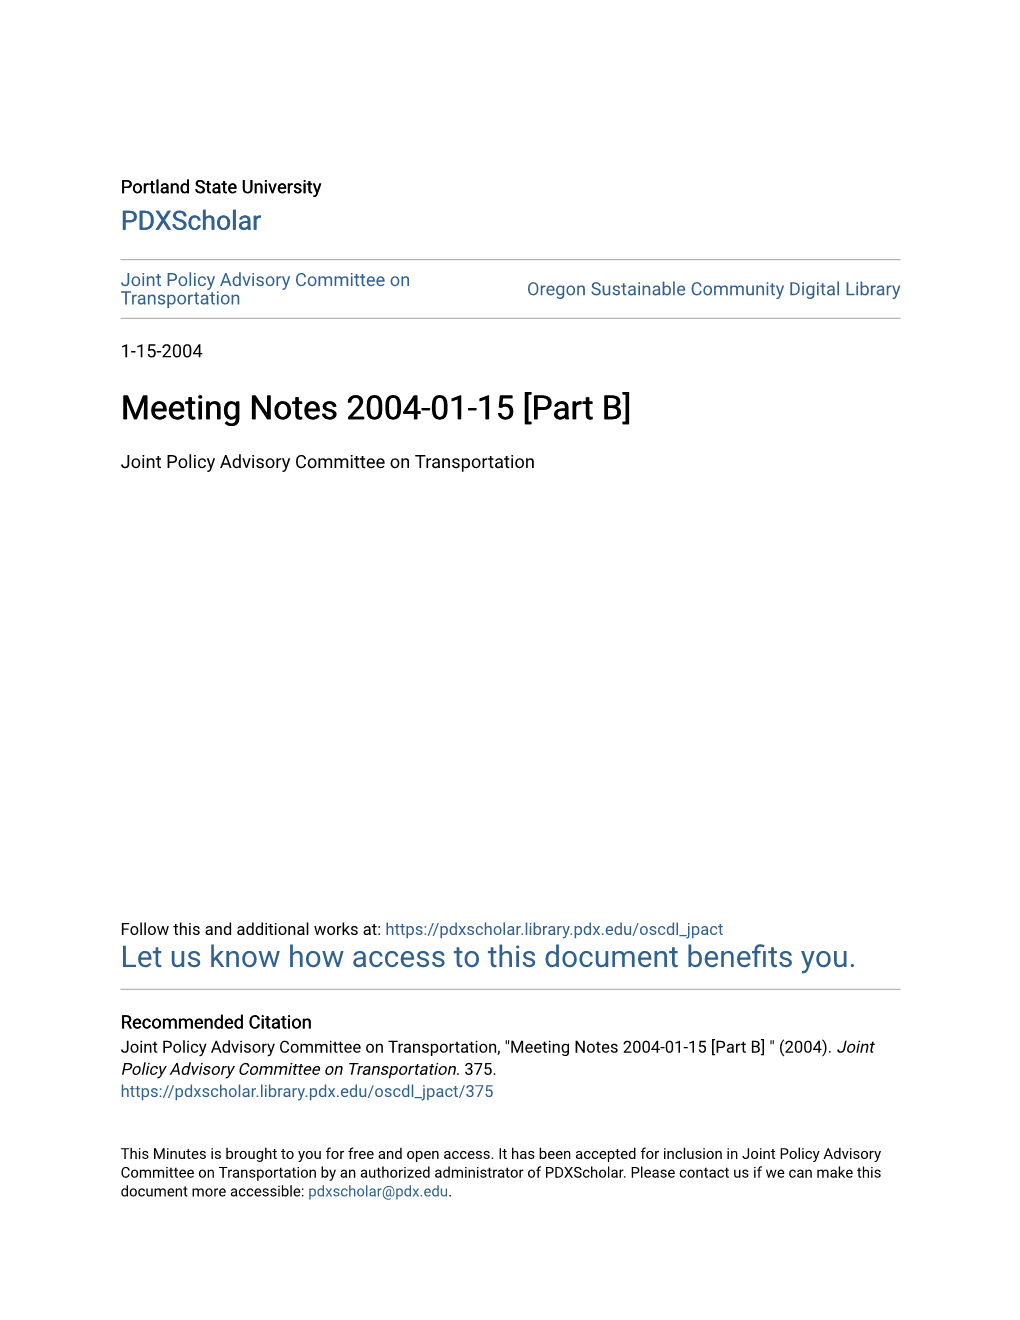 Meeting Notes 2004-01-15 [Part B]